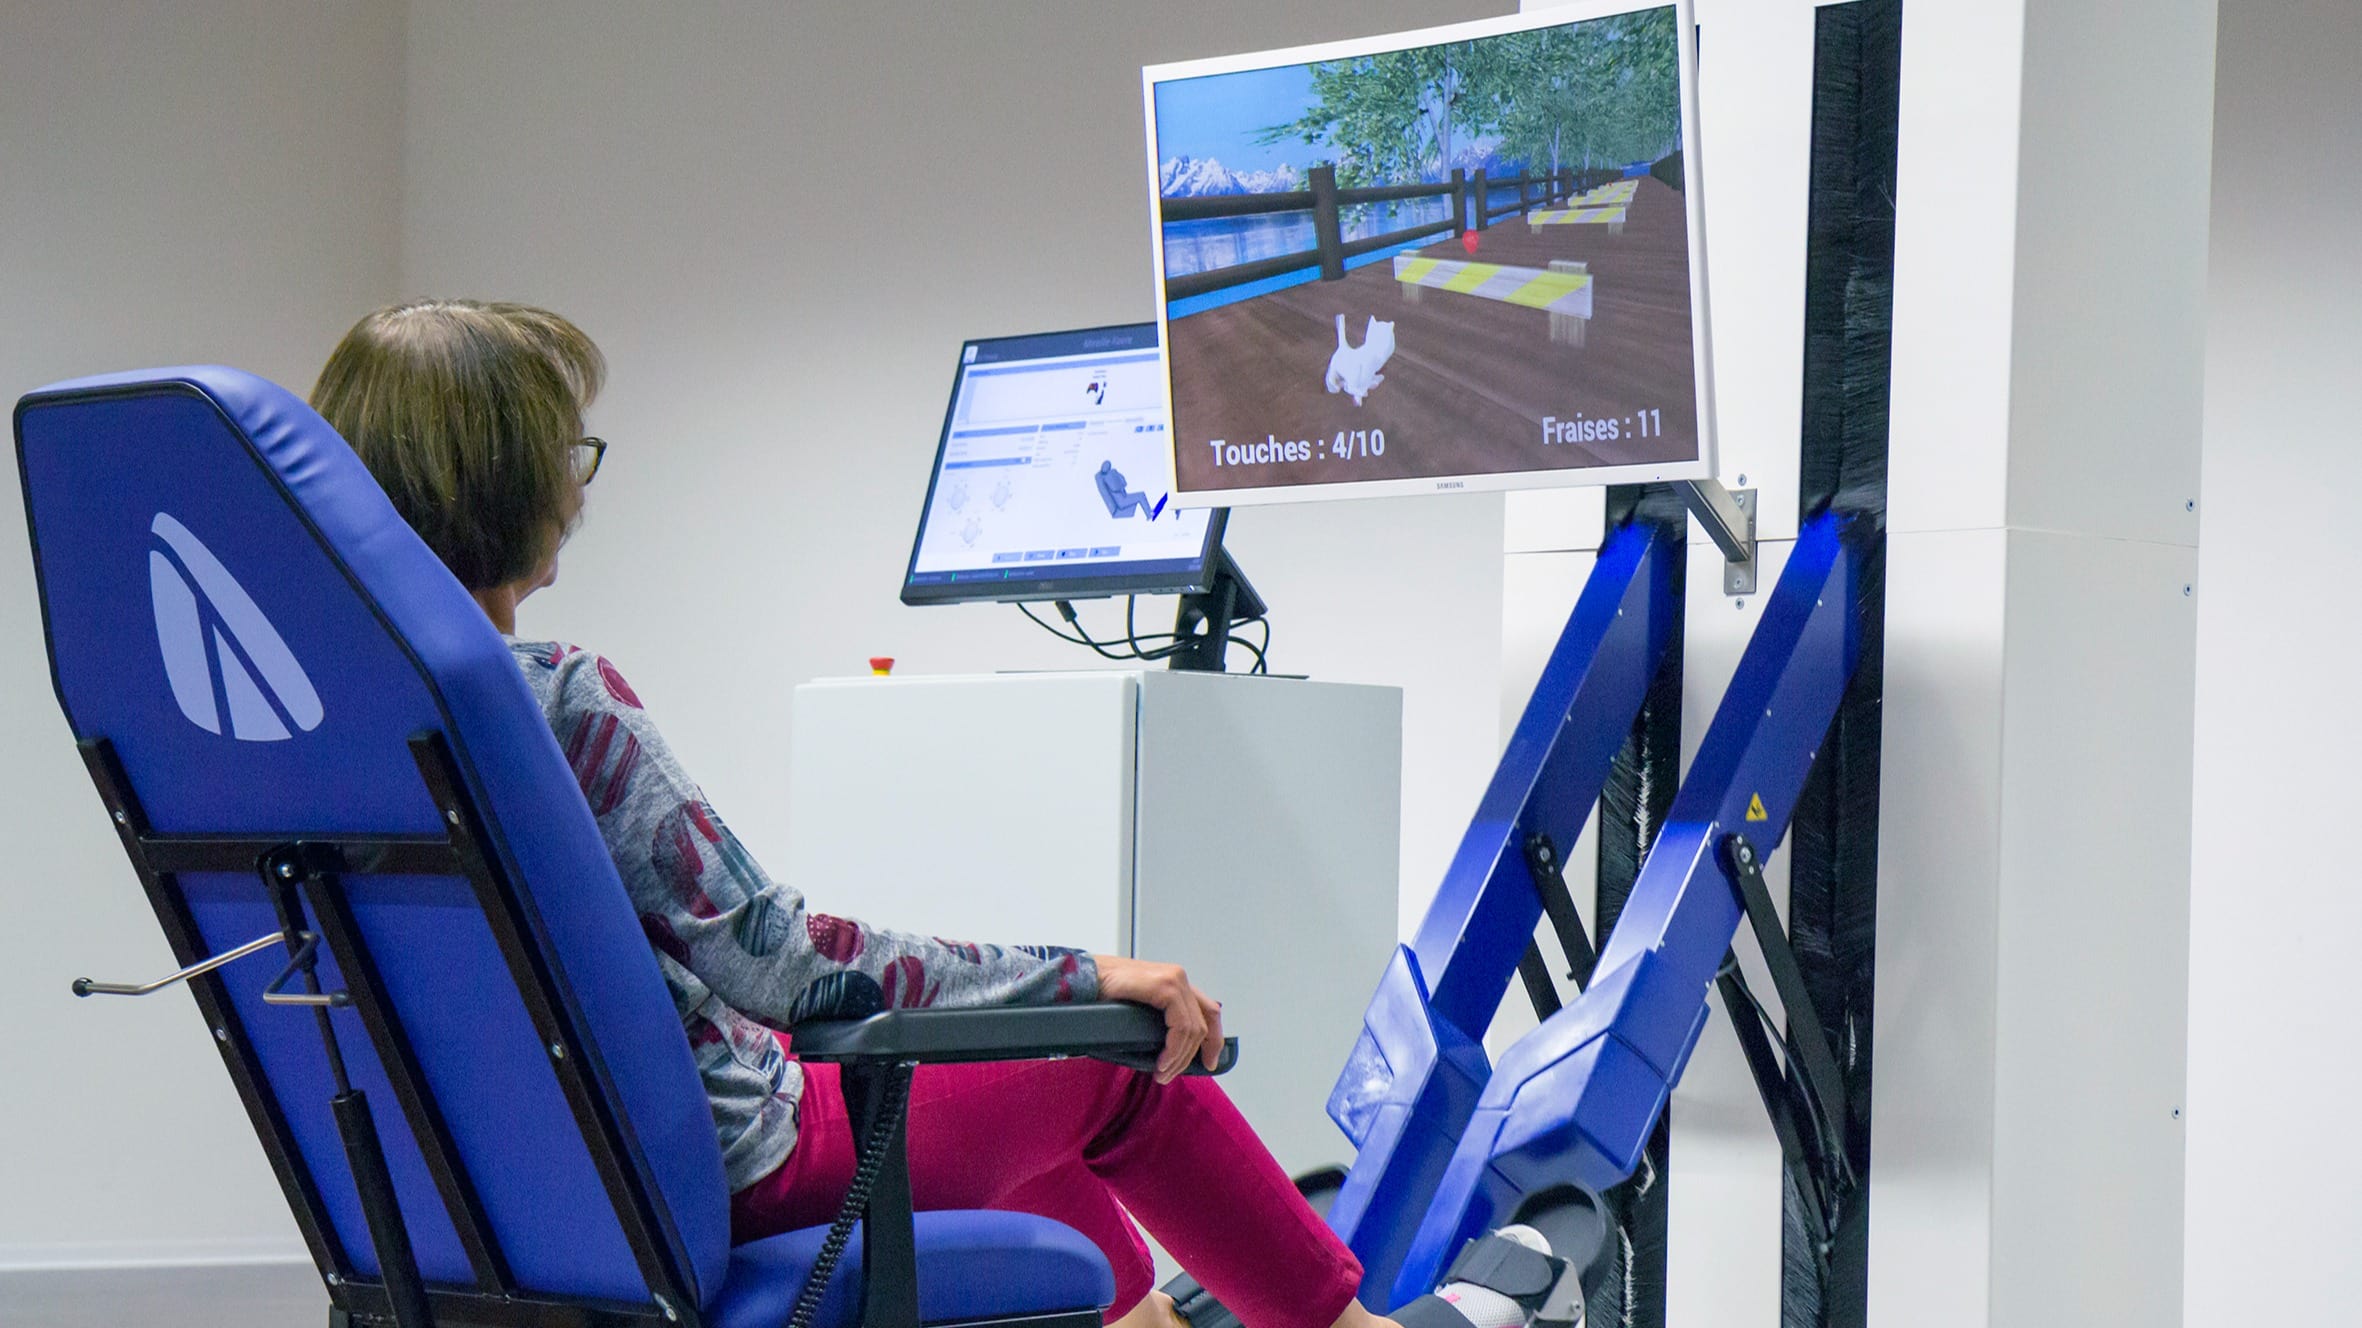 Games allow patients having fun during rehabilitation